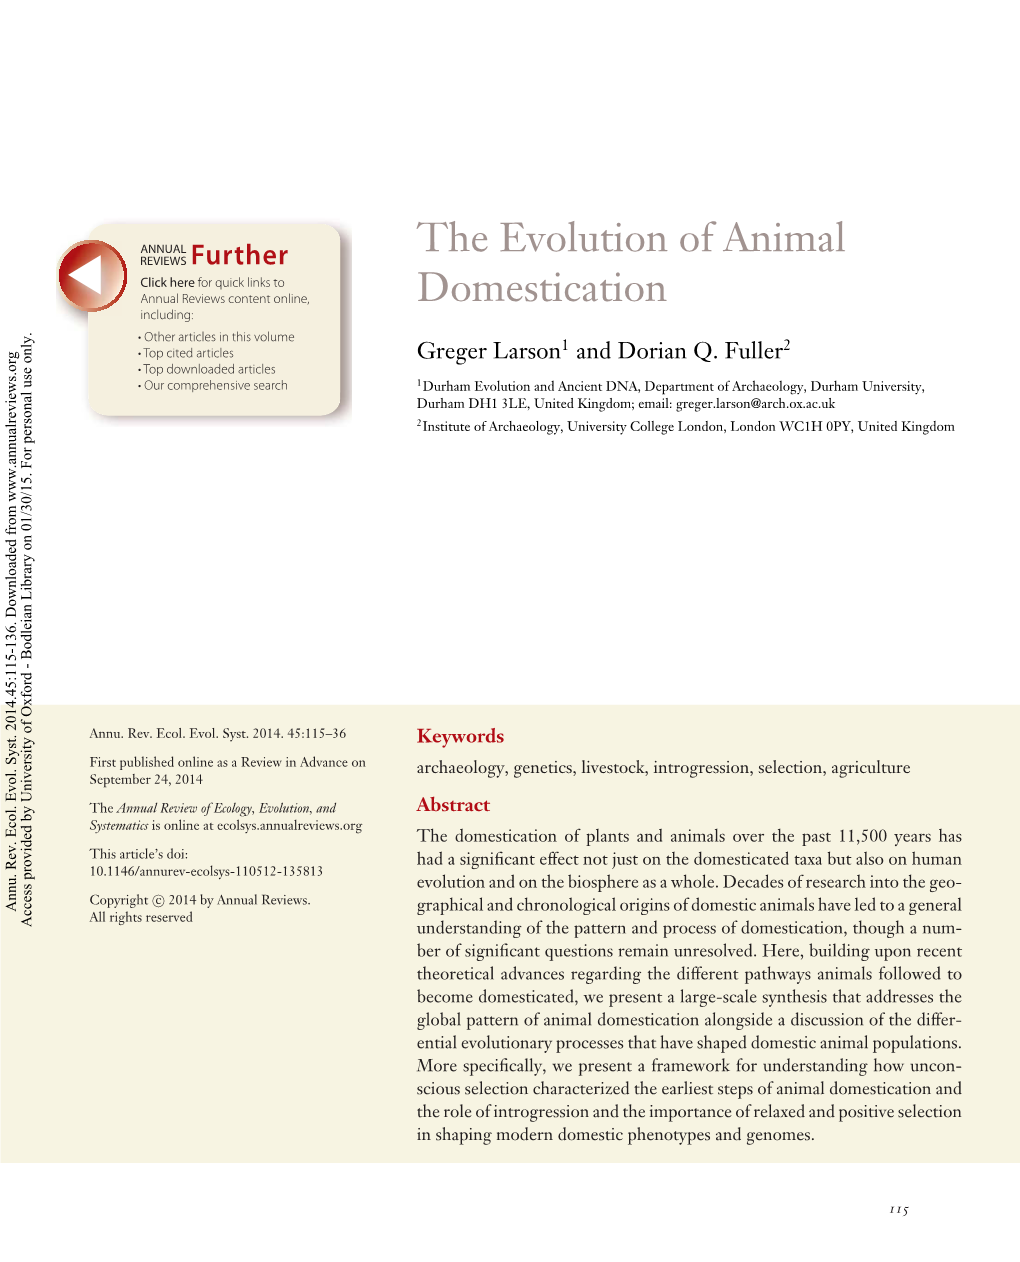 The Evolution of Animal Domestication